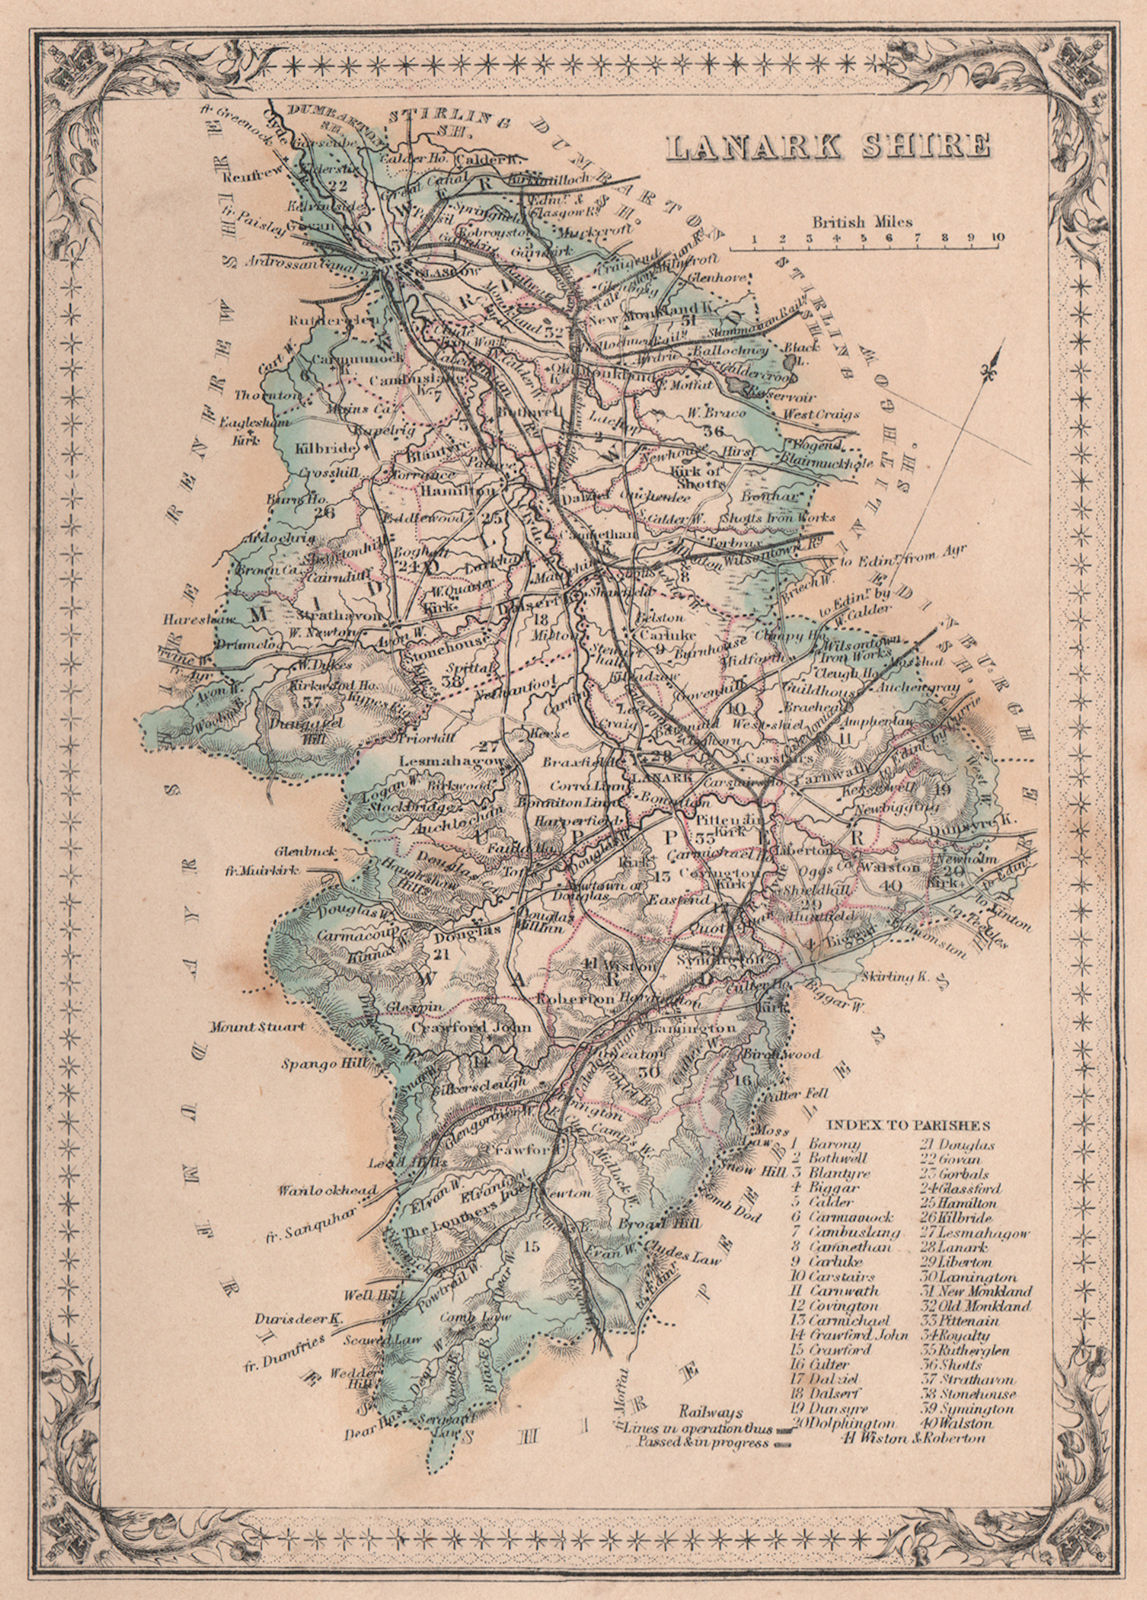 Associate Product Decorative antique county map of Lanarkshire, Scotland. FULLARTON 1868 old